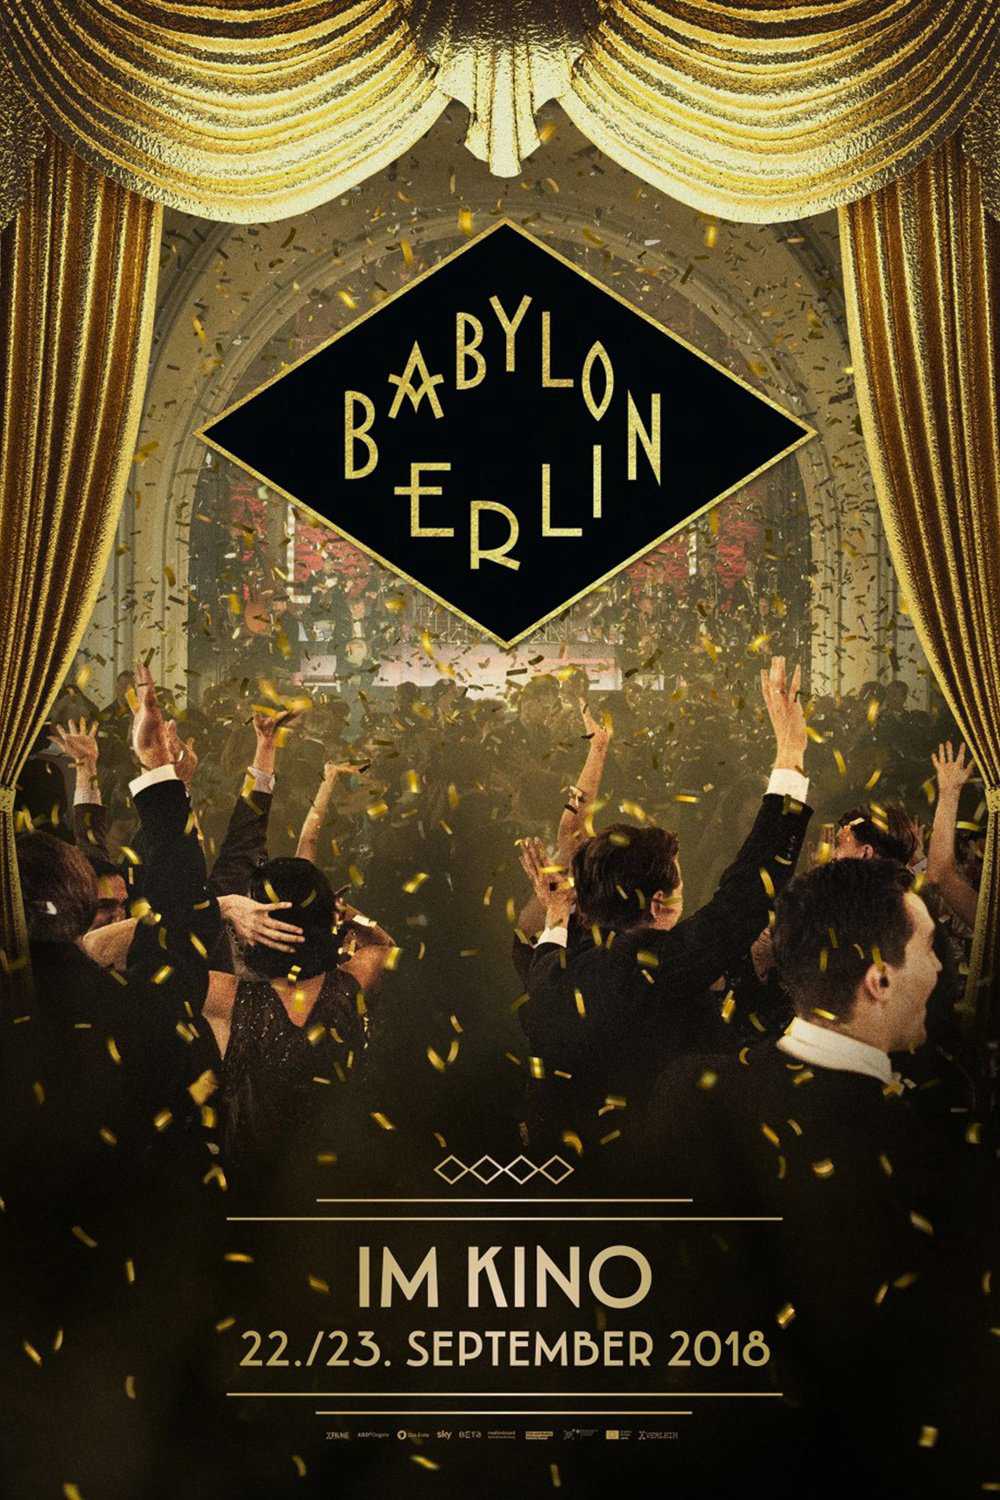 Babylon berlin (phần 2) - Babylon berlin (season 2)